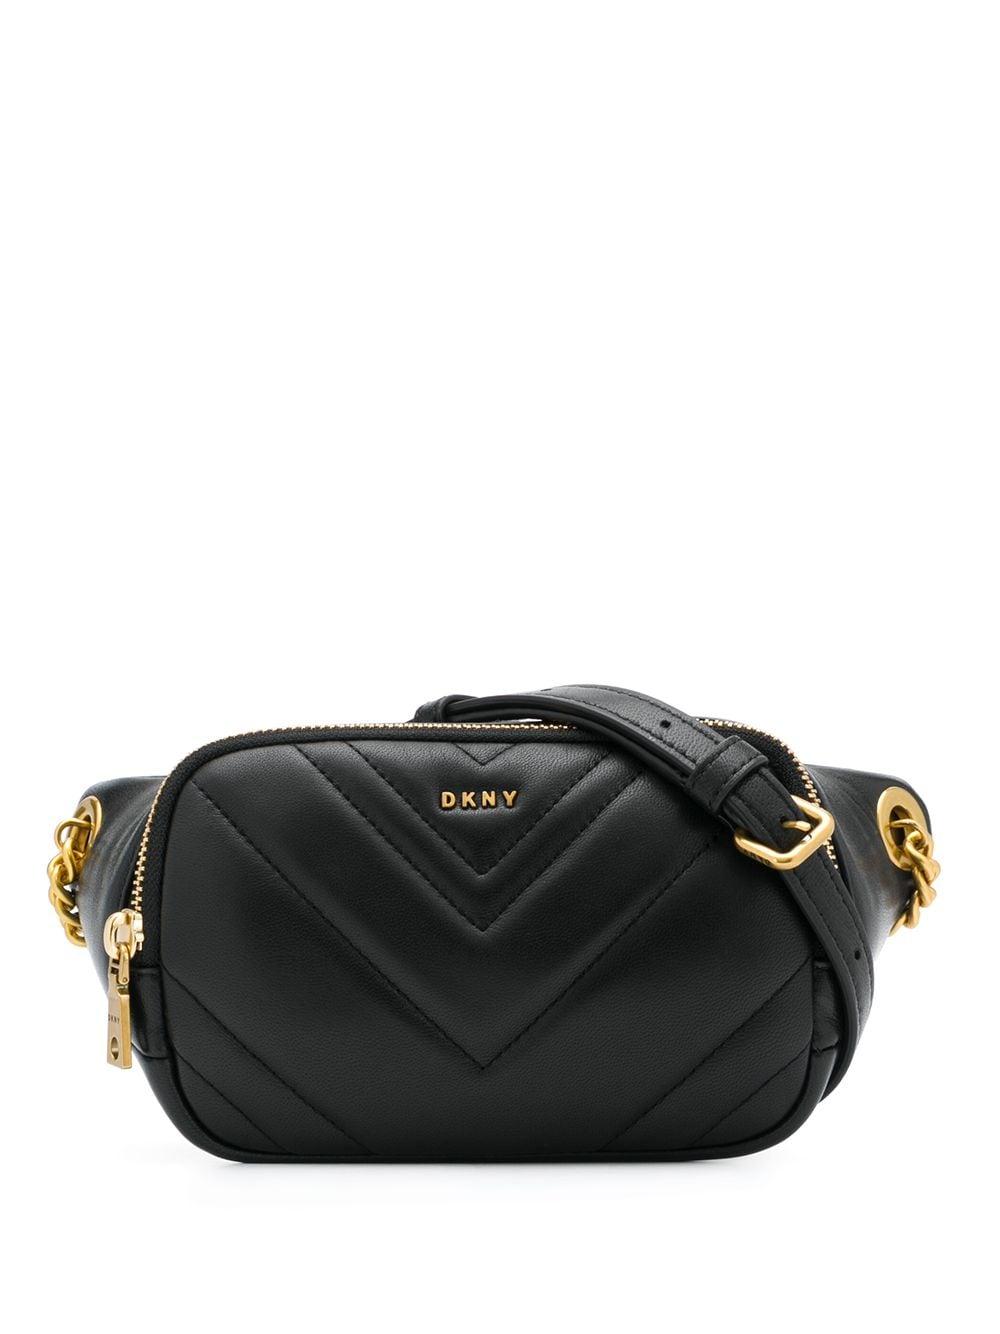 DKNY Vivian Quilted Belt Bag in Black | Lyst UK